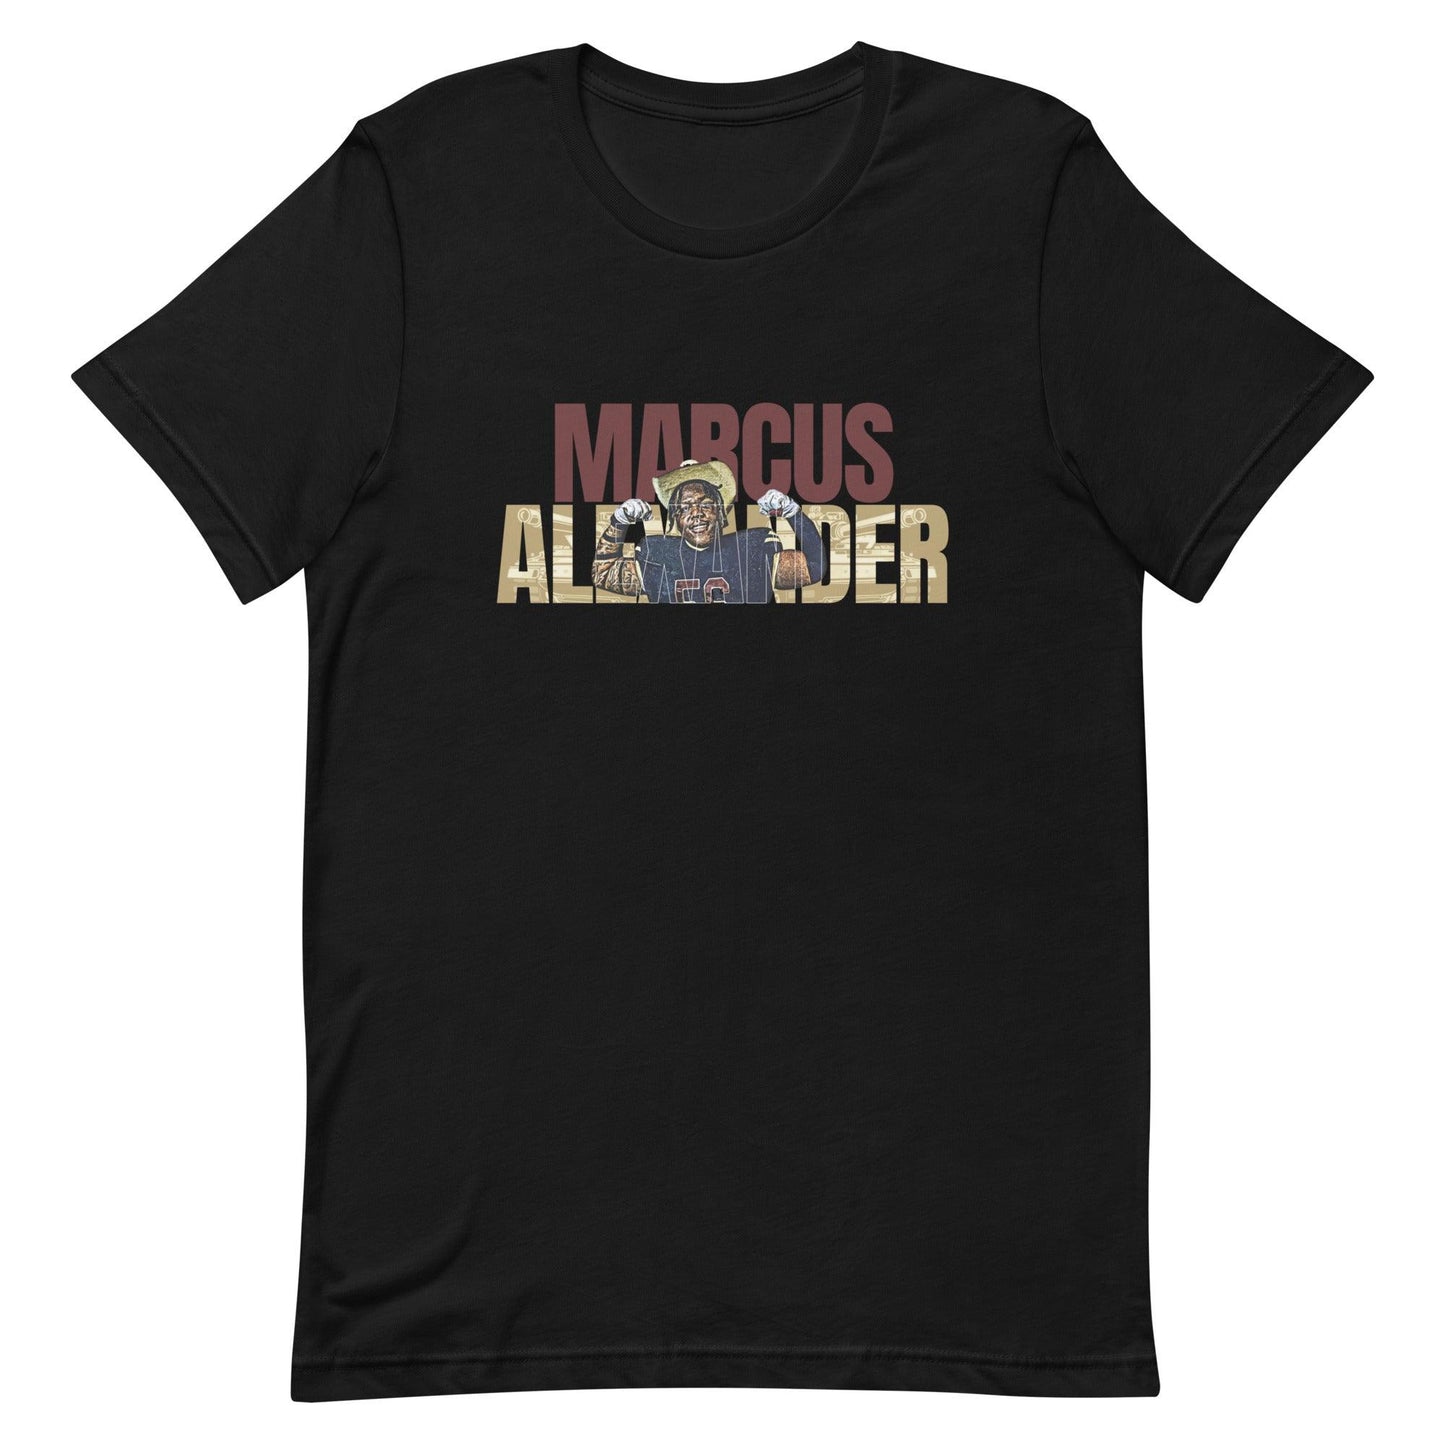 Marcus Alexander "Gameday" t-shirt - Fan Arch